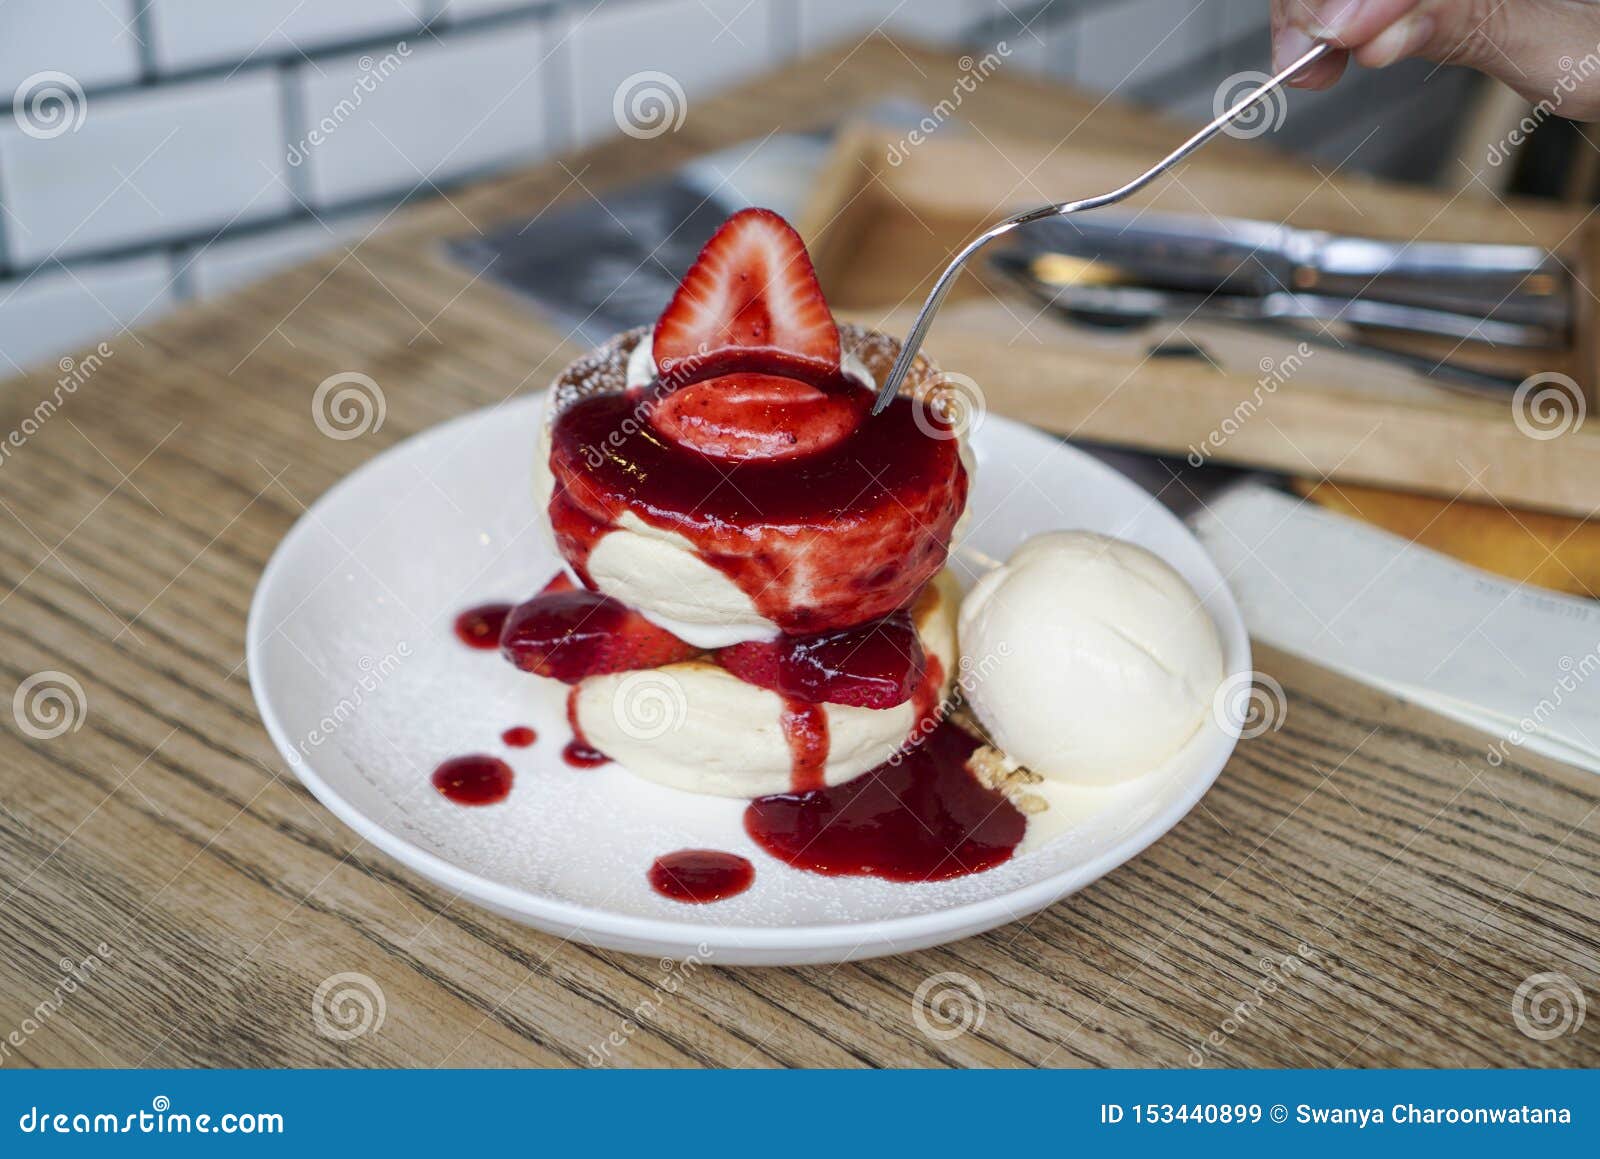 Strawberry Soufflé Pancake with Ice Cream. Stock Image   Image of ...